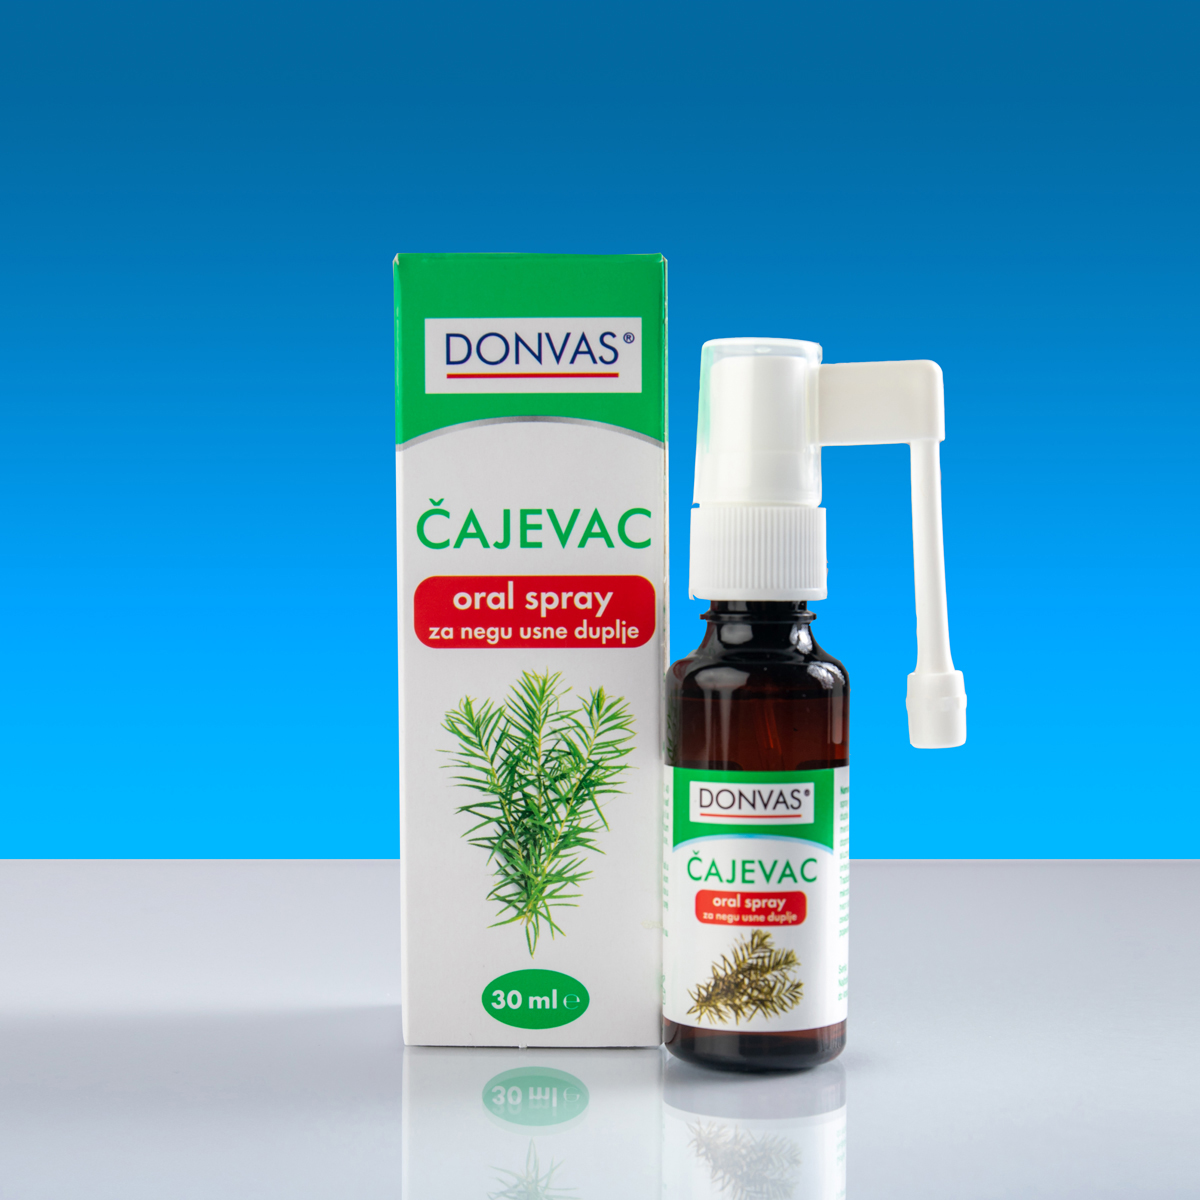 TEA TREE oral spray DONVAS®, 30 ml